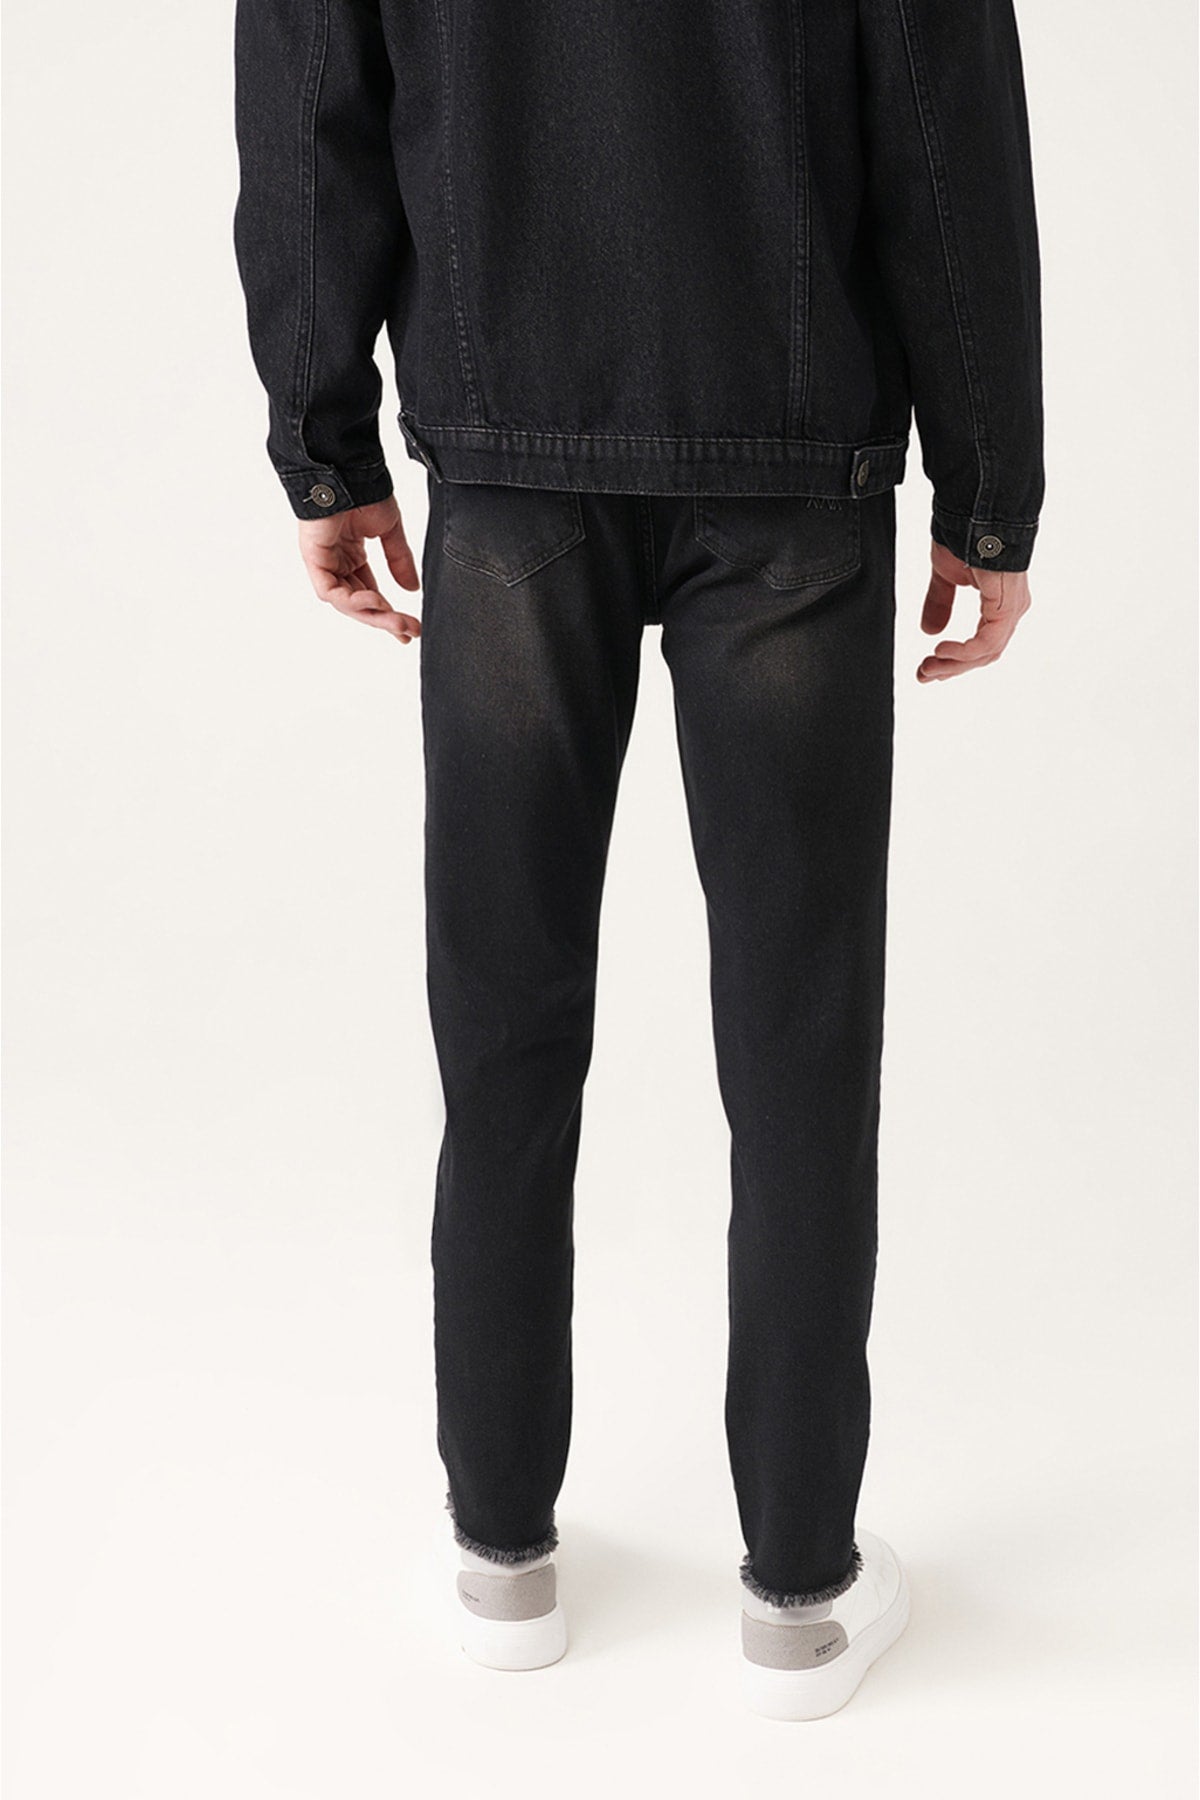 Men's black flat washing lycra slim fit jean pants A31y3504